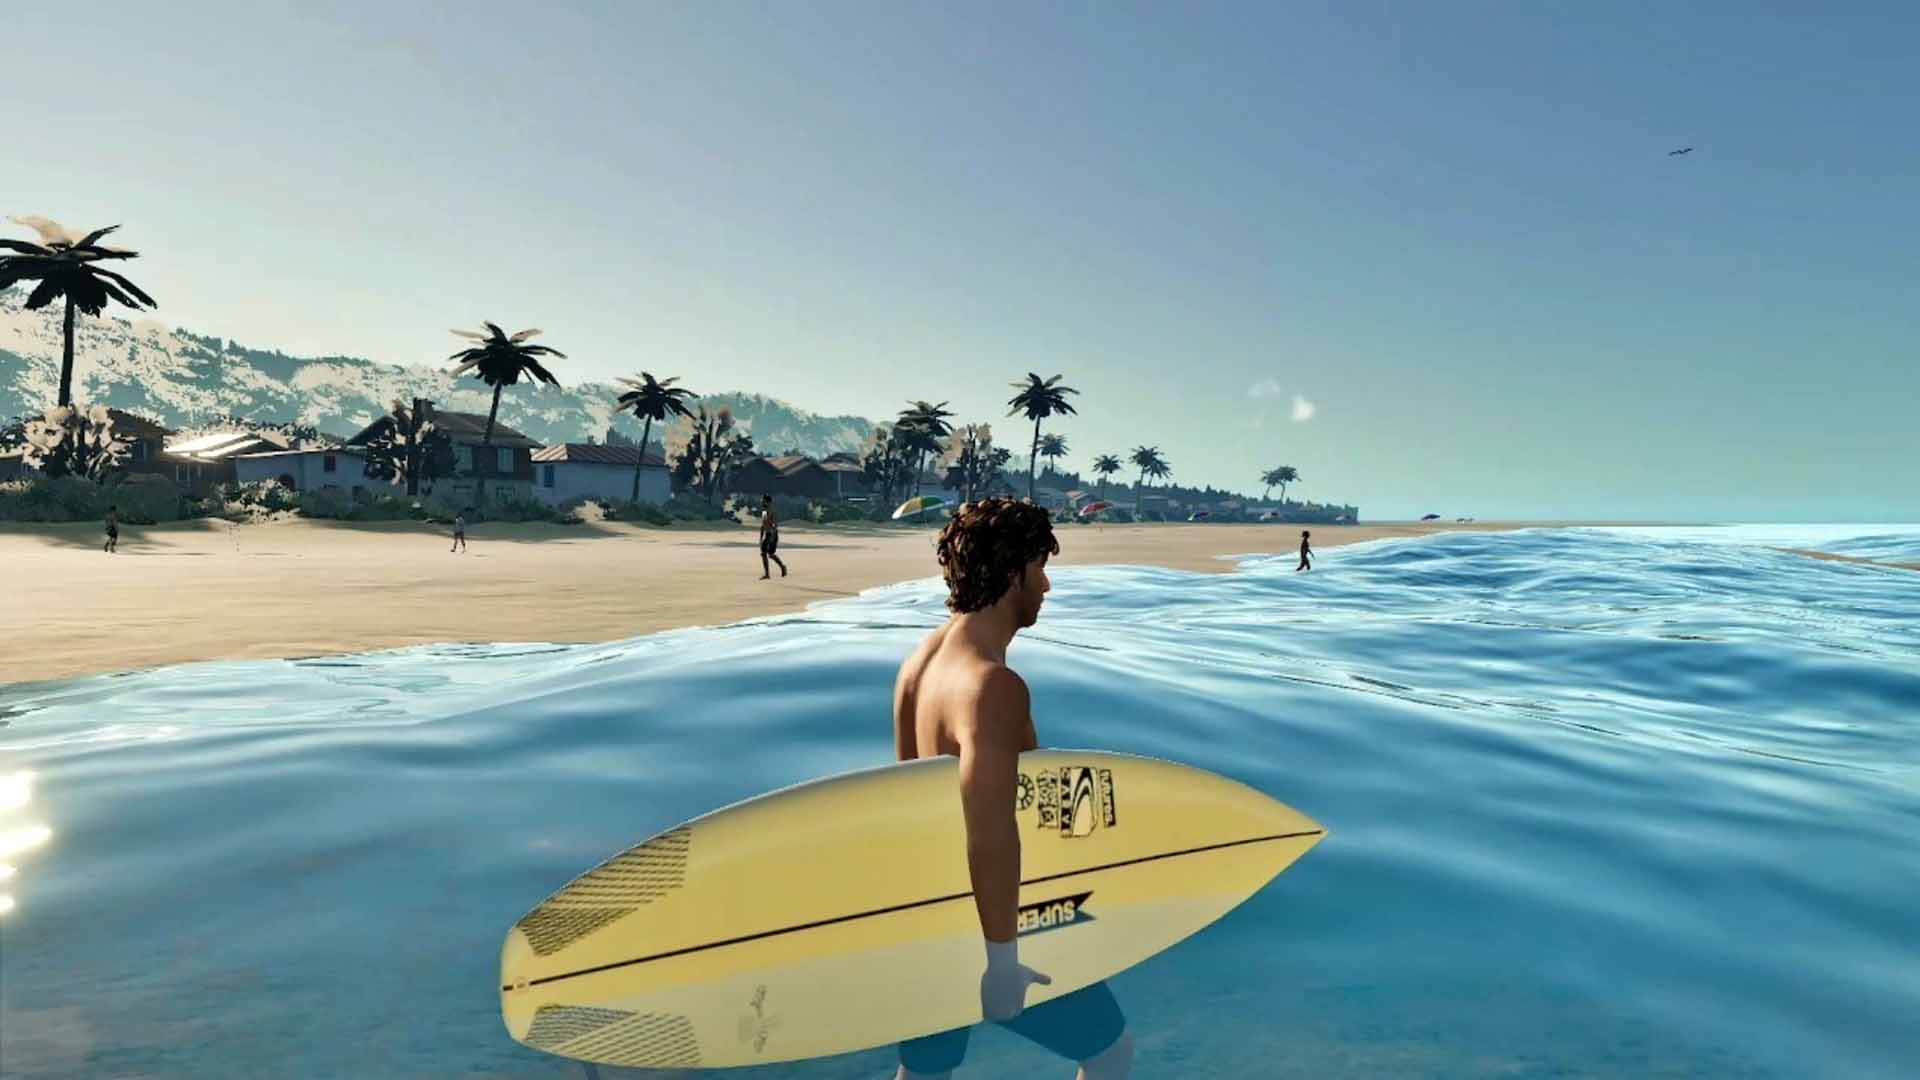 A screenshot from Barton Lynch Pro Surfing